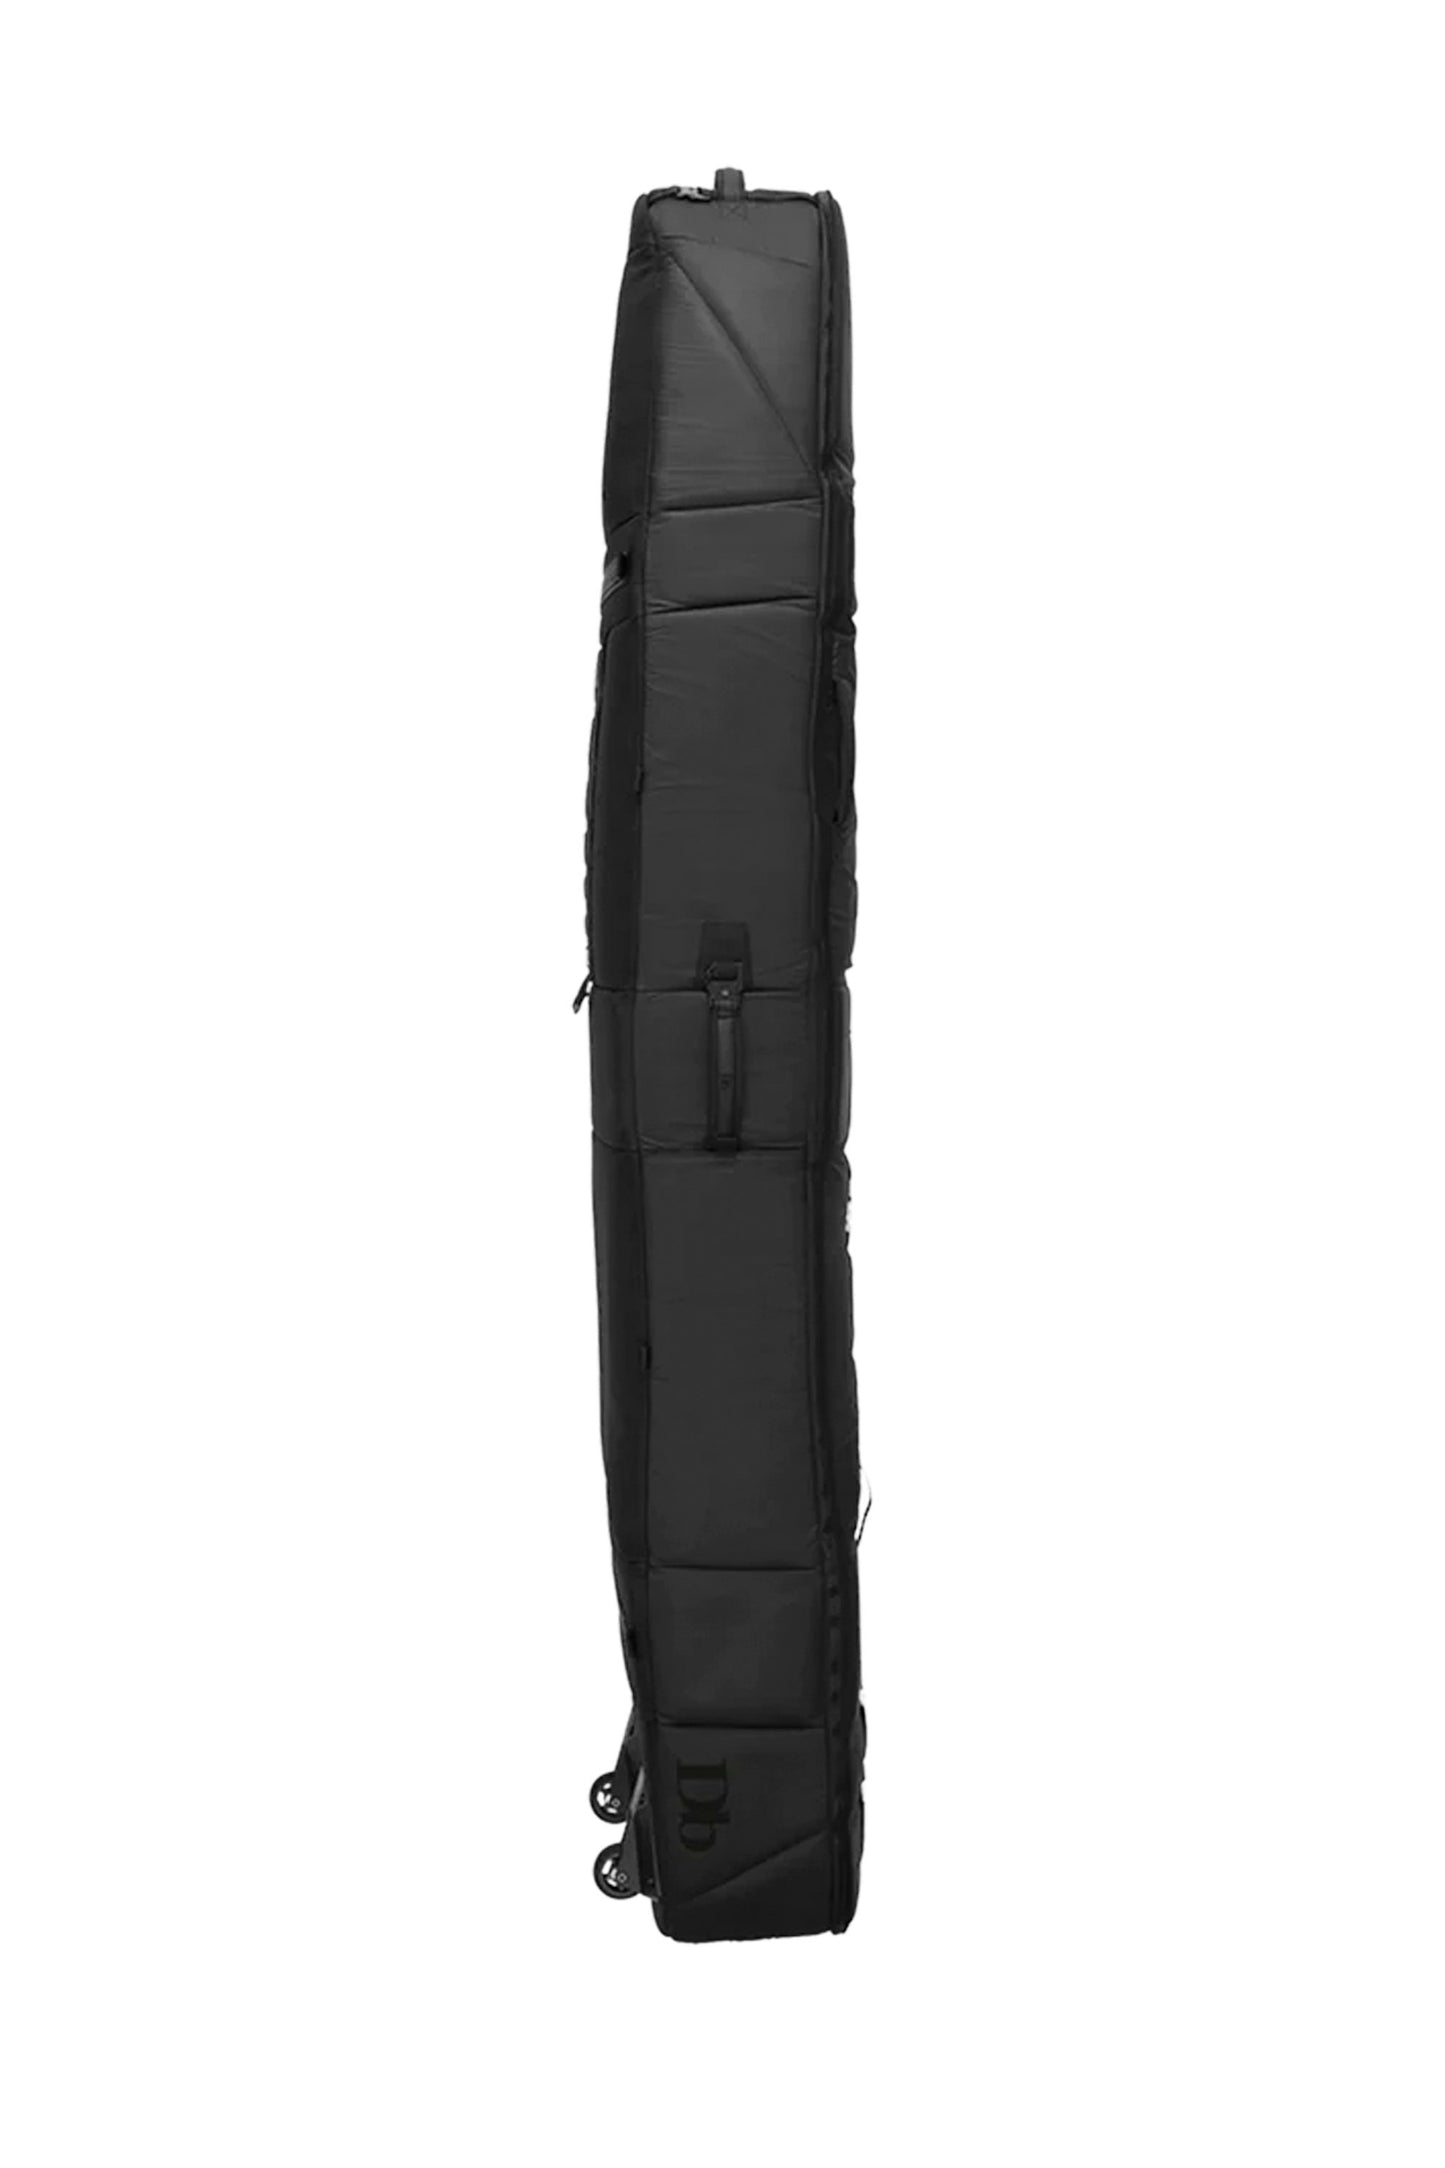 Hugger Backpack 30L Moss Green – Db North America